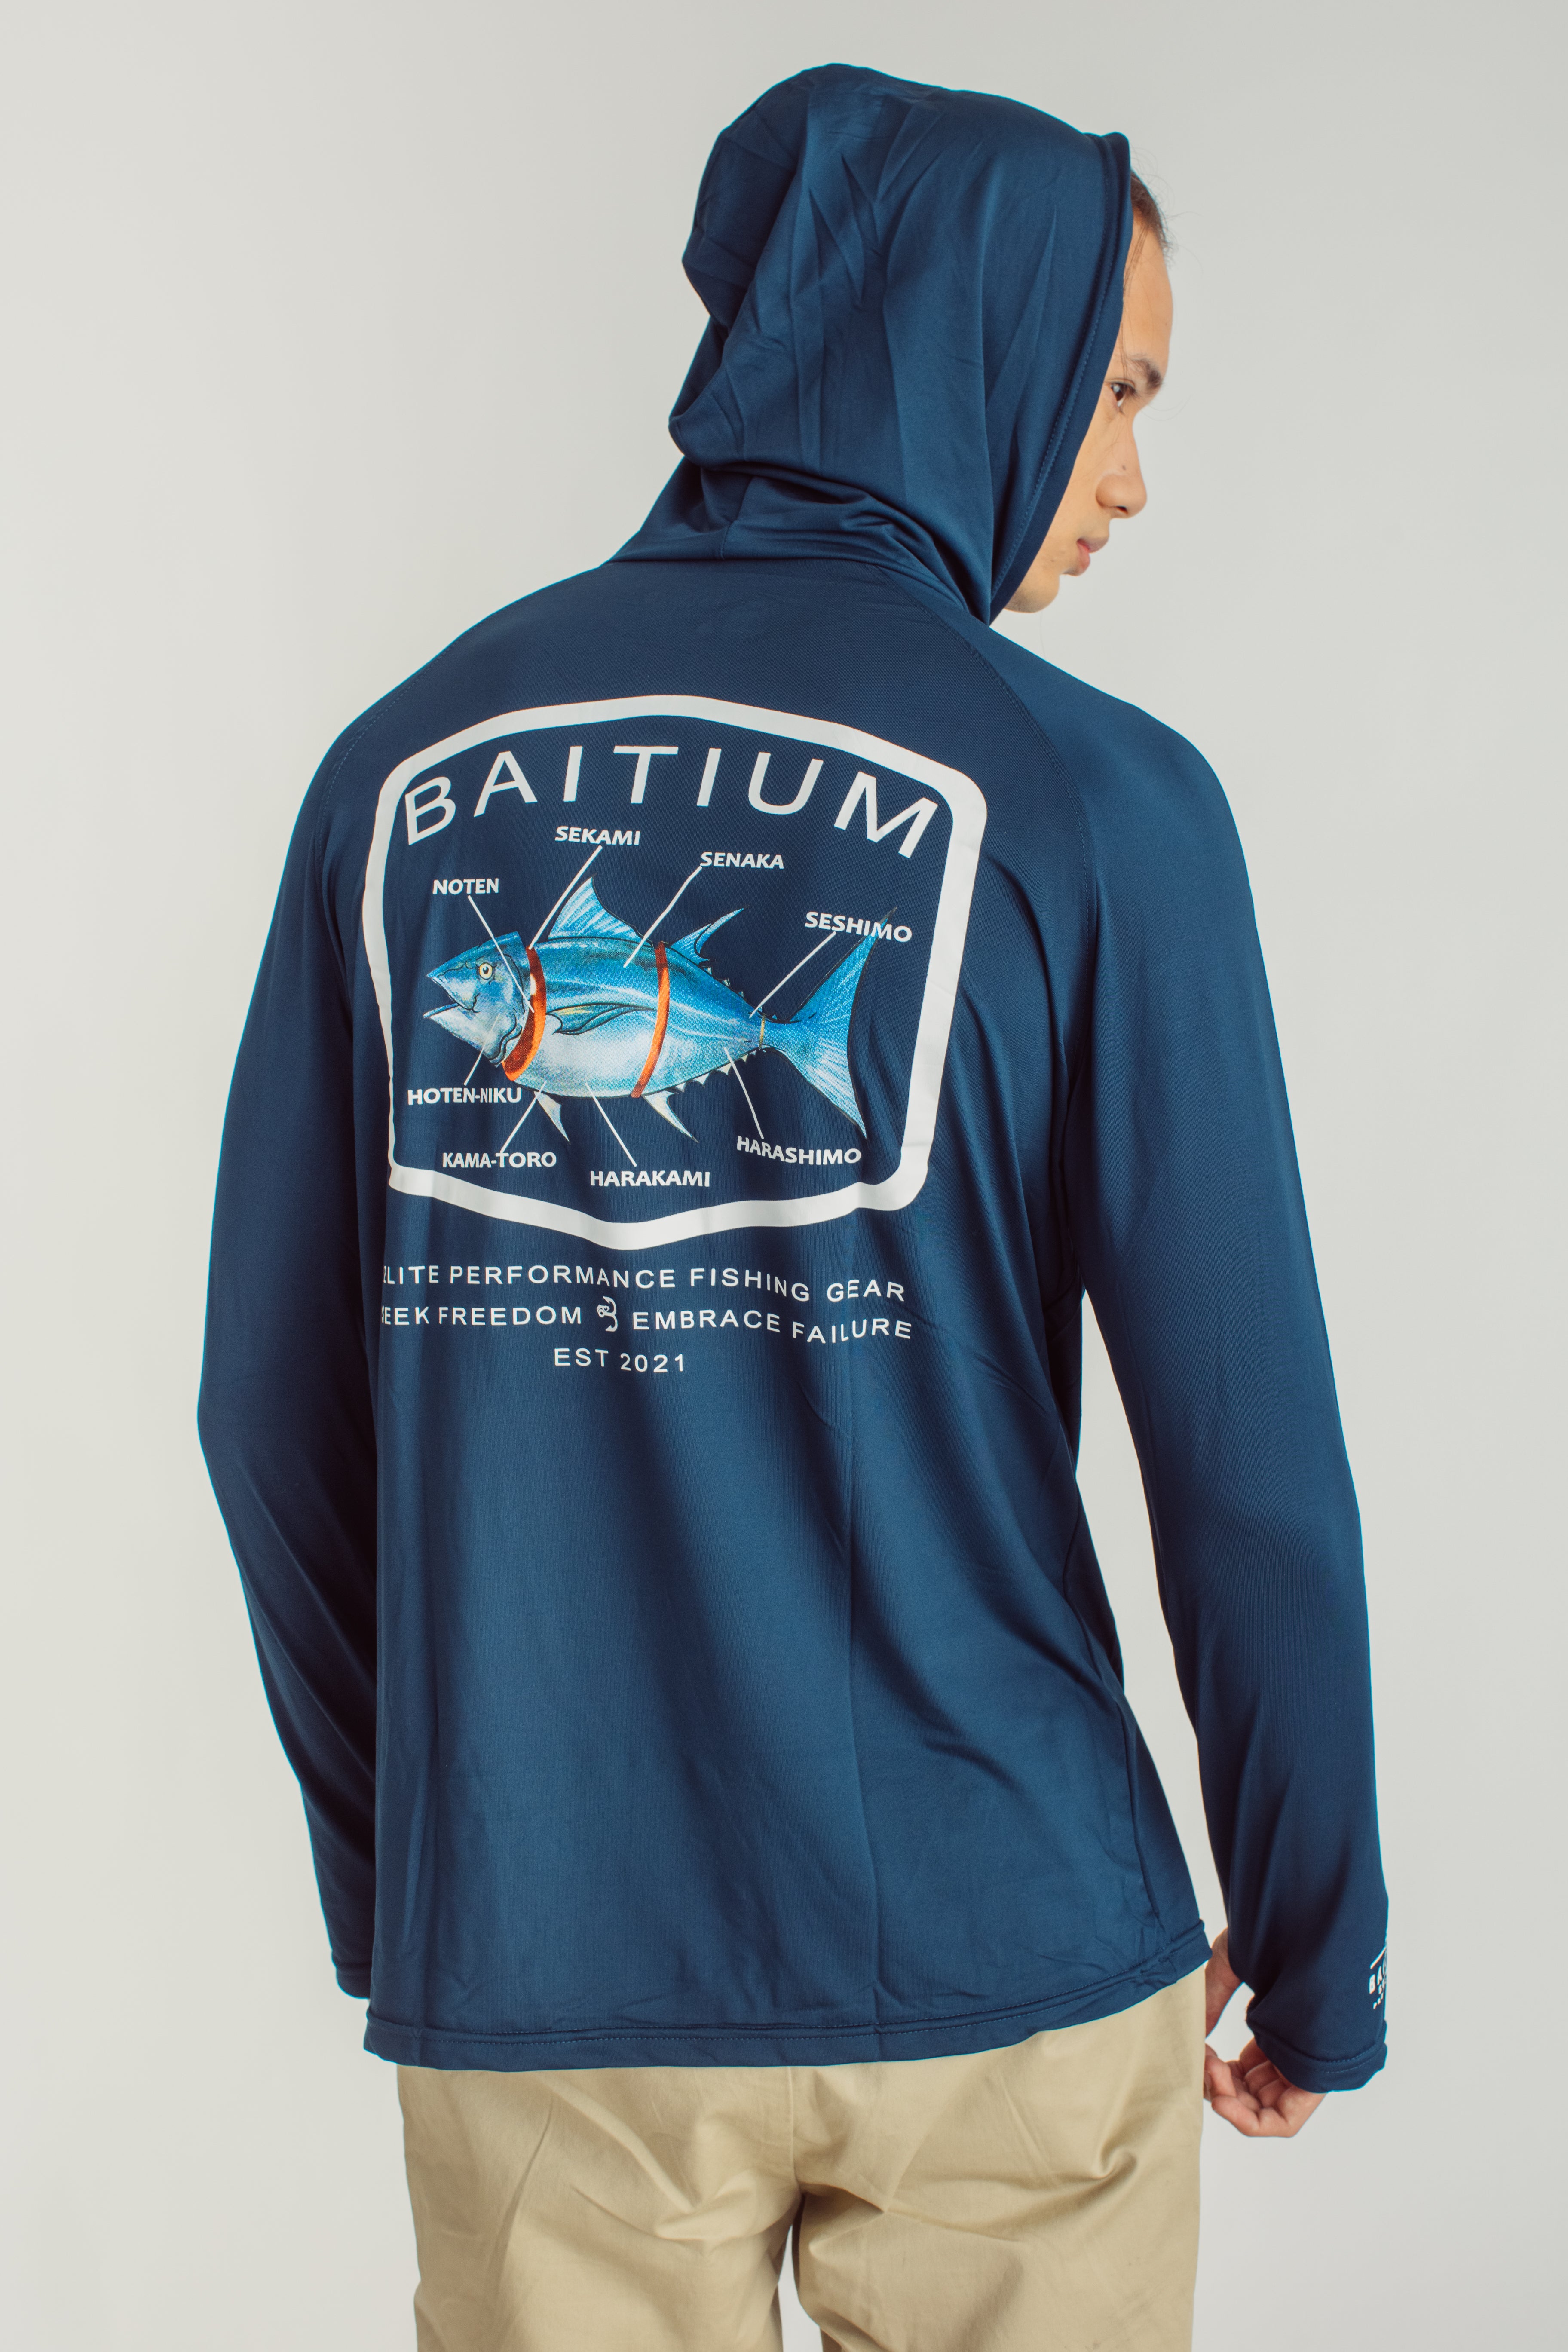 Baitium Original Hooded UPF 50+ PFG Long Sleeves Fishing Shirts. Bluefin Tuna / Large